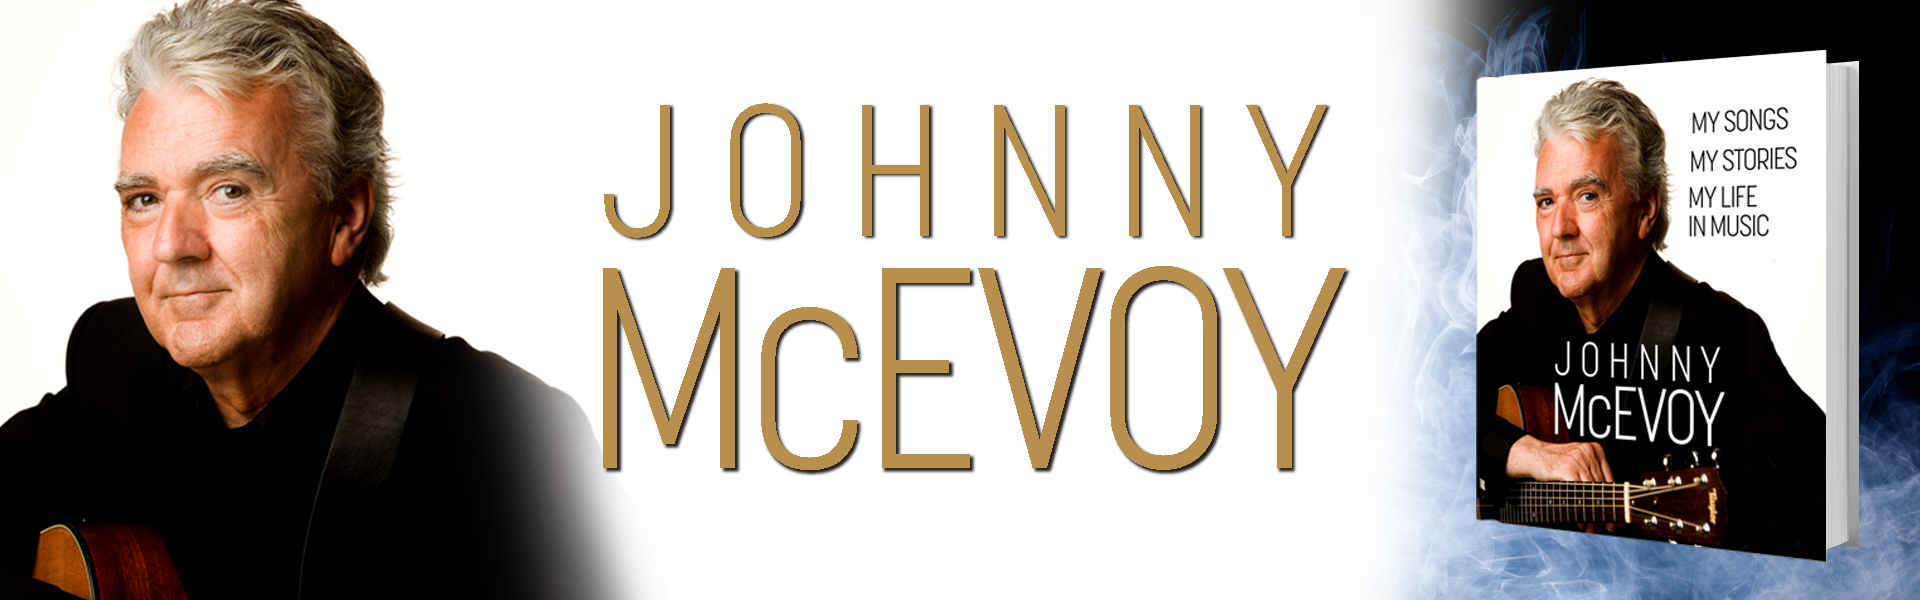 Johnny-McEvoy-title